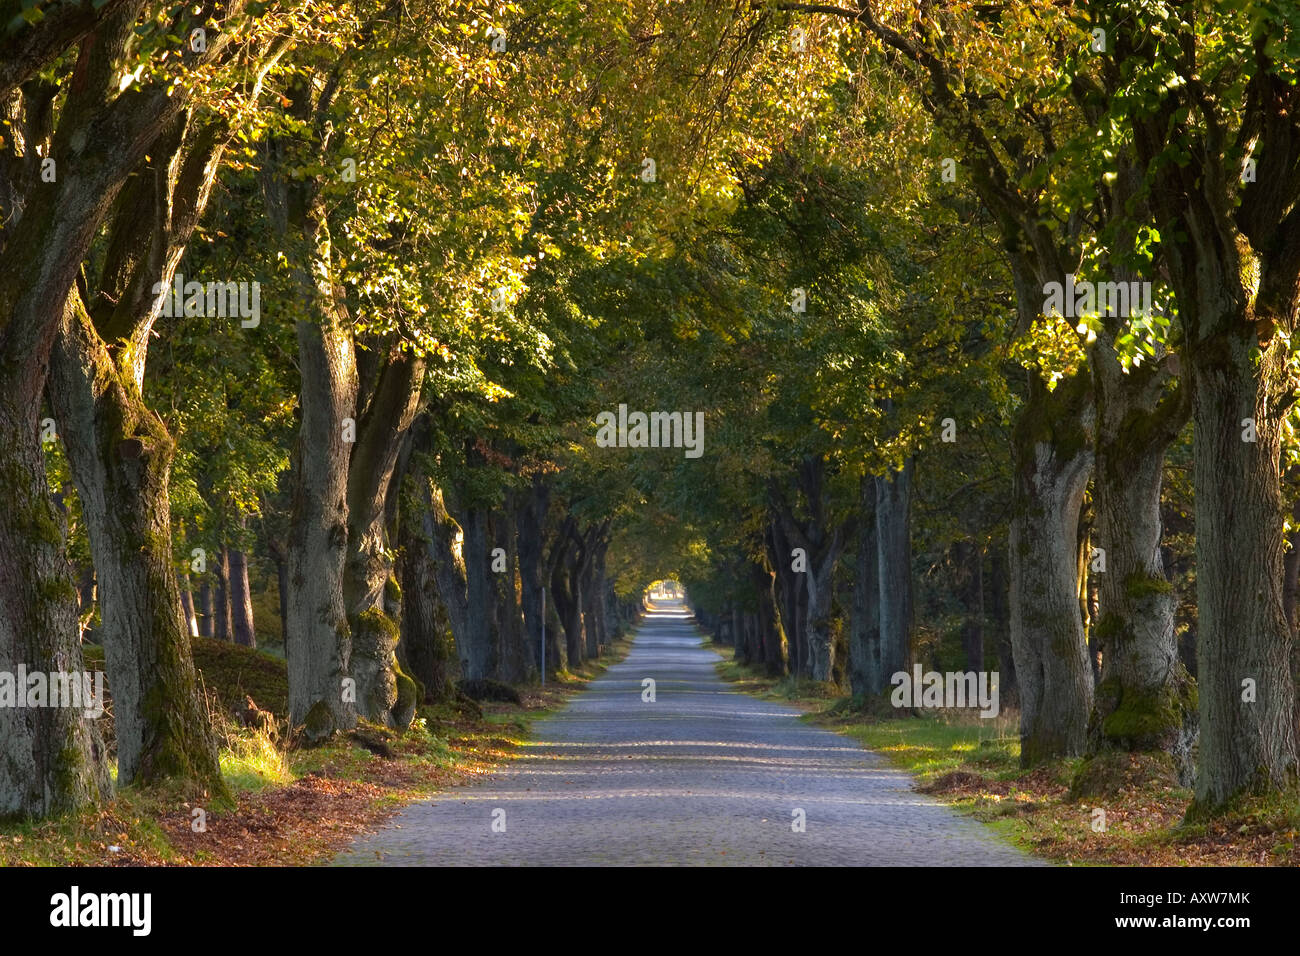 Tree avenue in fall, Senne, Nordrhein Westfalen (North Rhine Westphalia), Germany, Europe Stock Photo